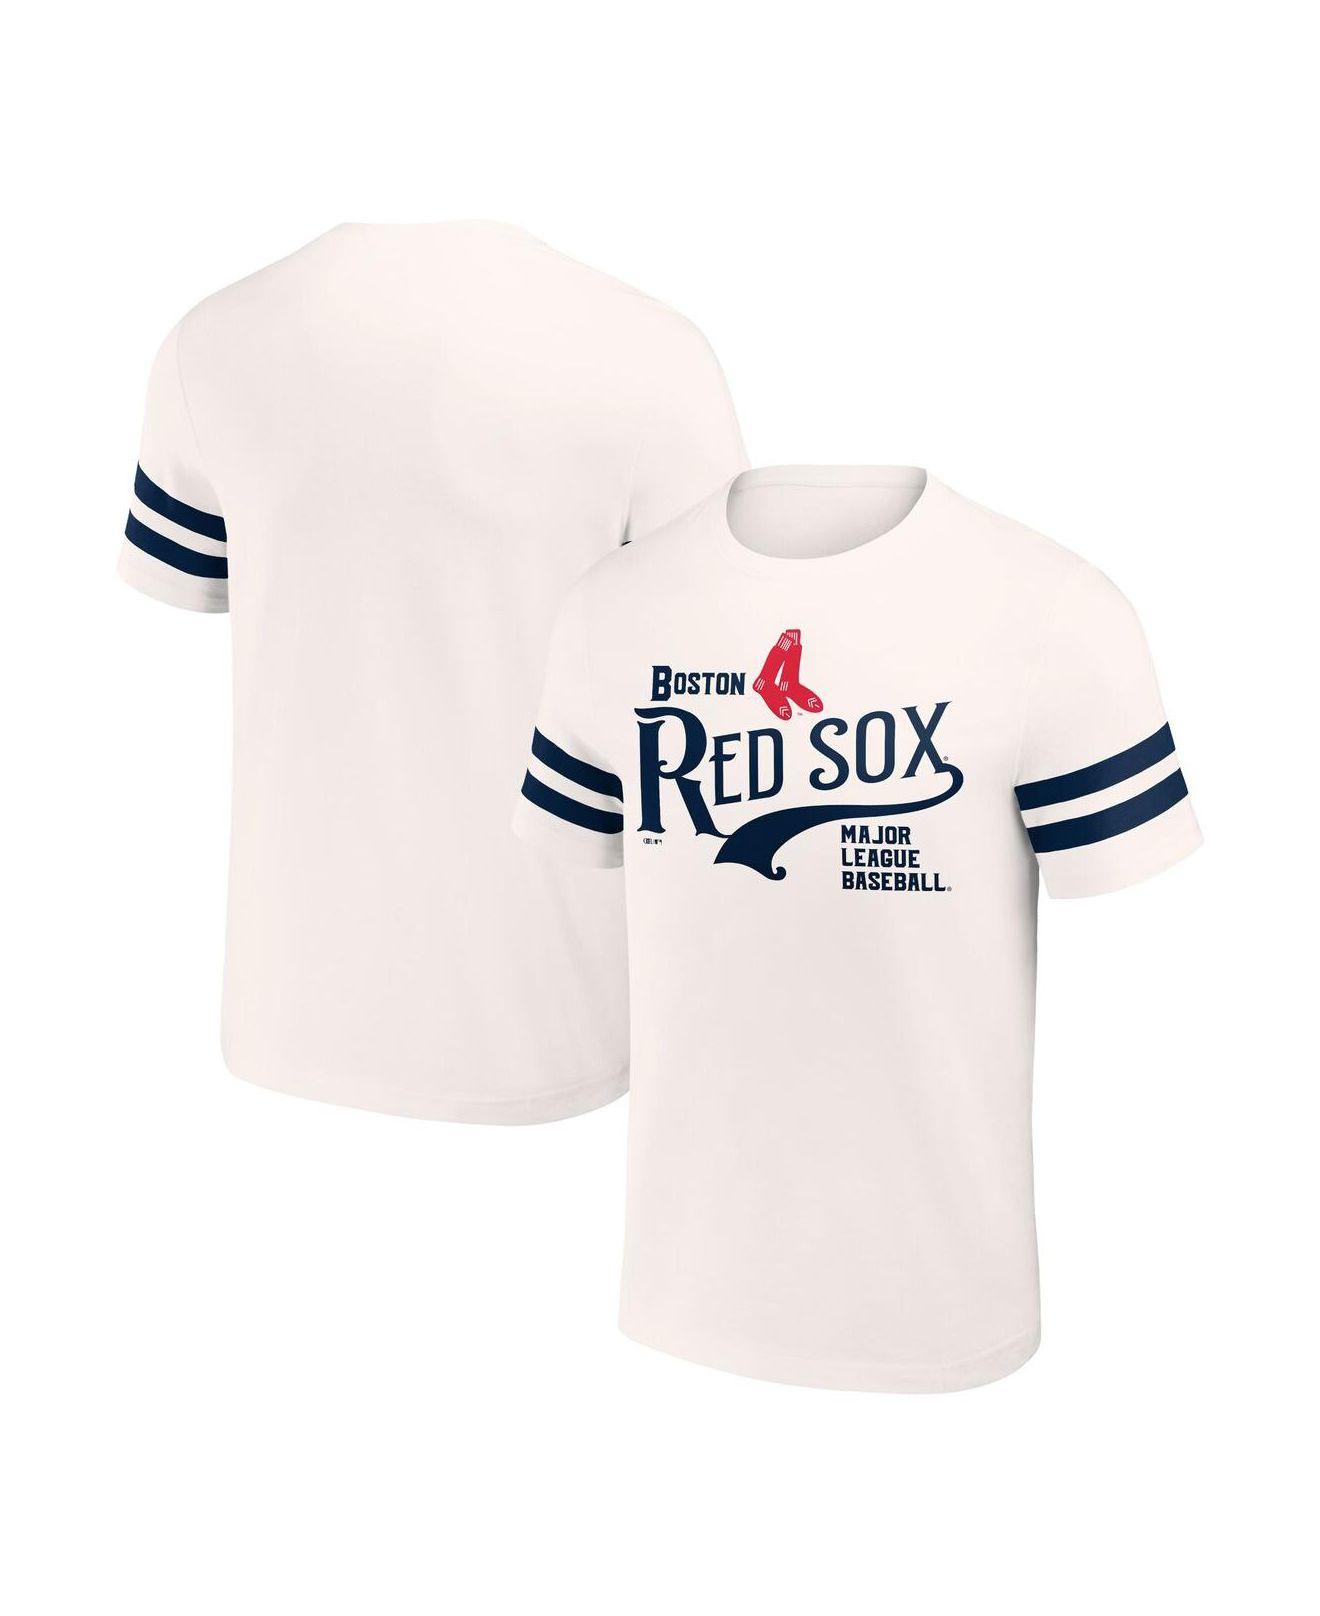 Fanatics Chicago Cubs Sports Fan Shirts for sale